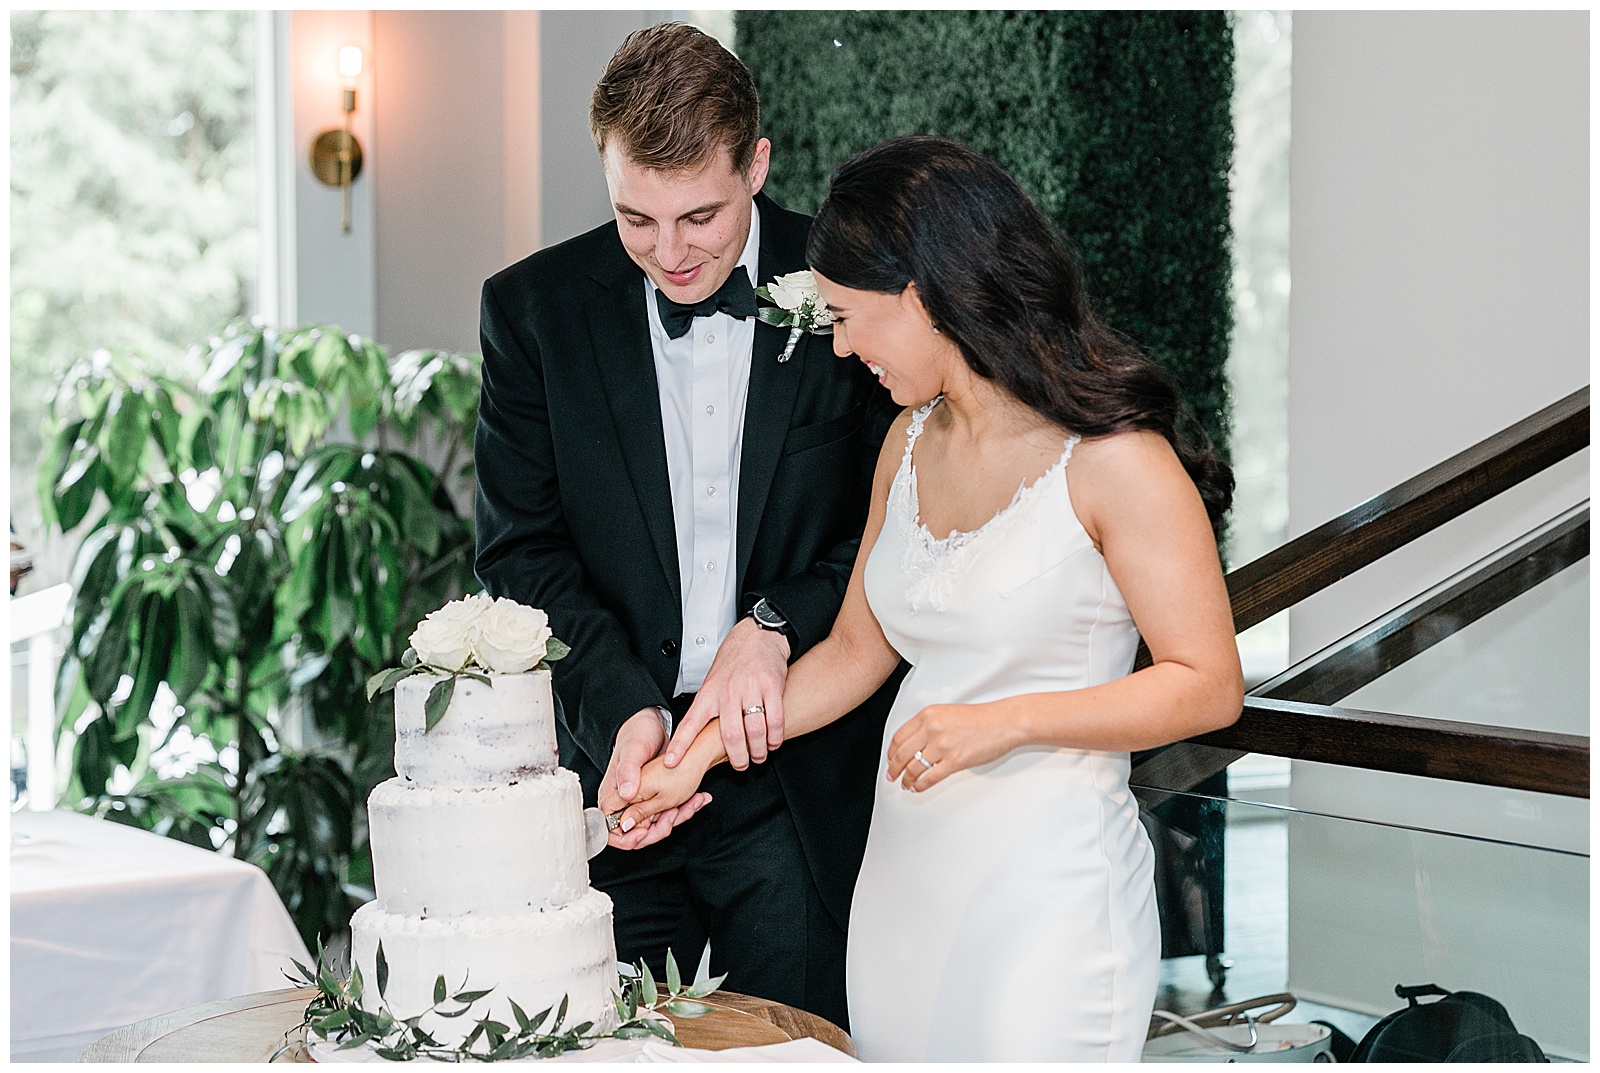 Roger-sherman-inn-bride-and-groom-cutting-cake.jpg